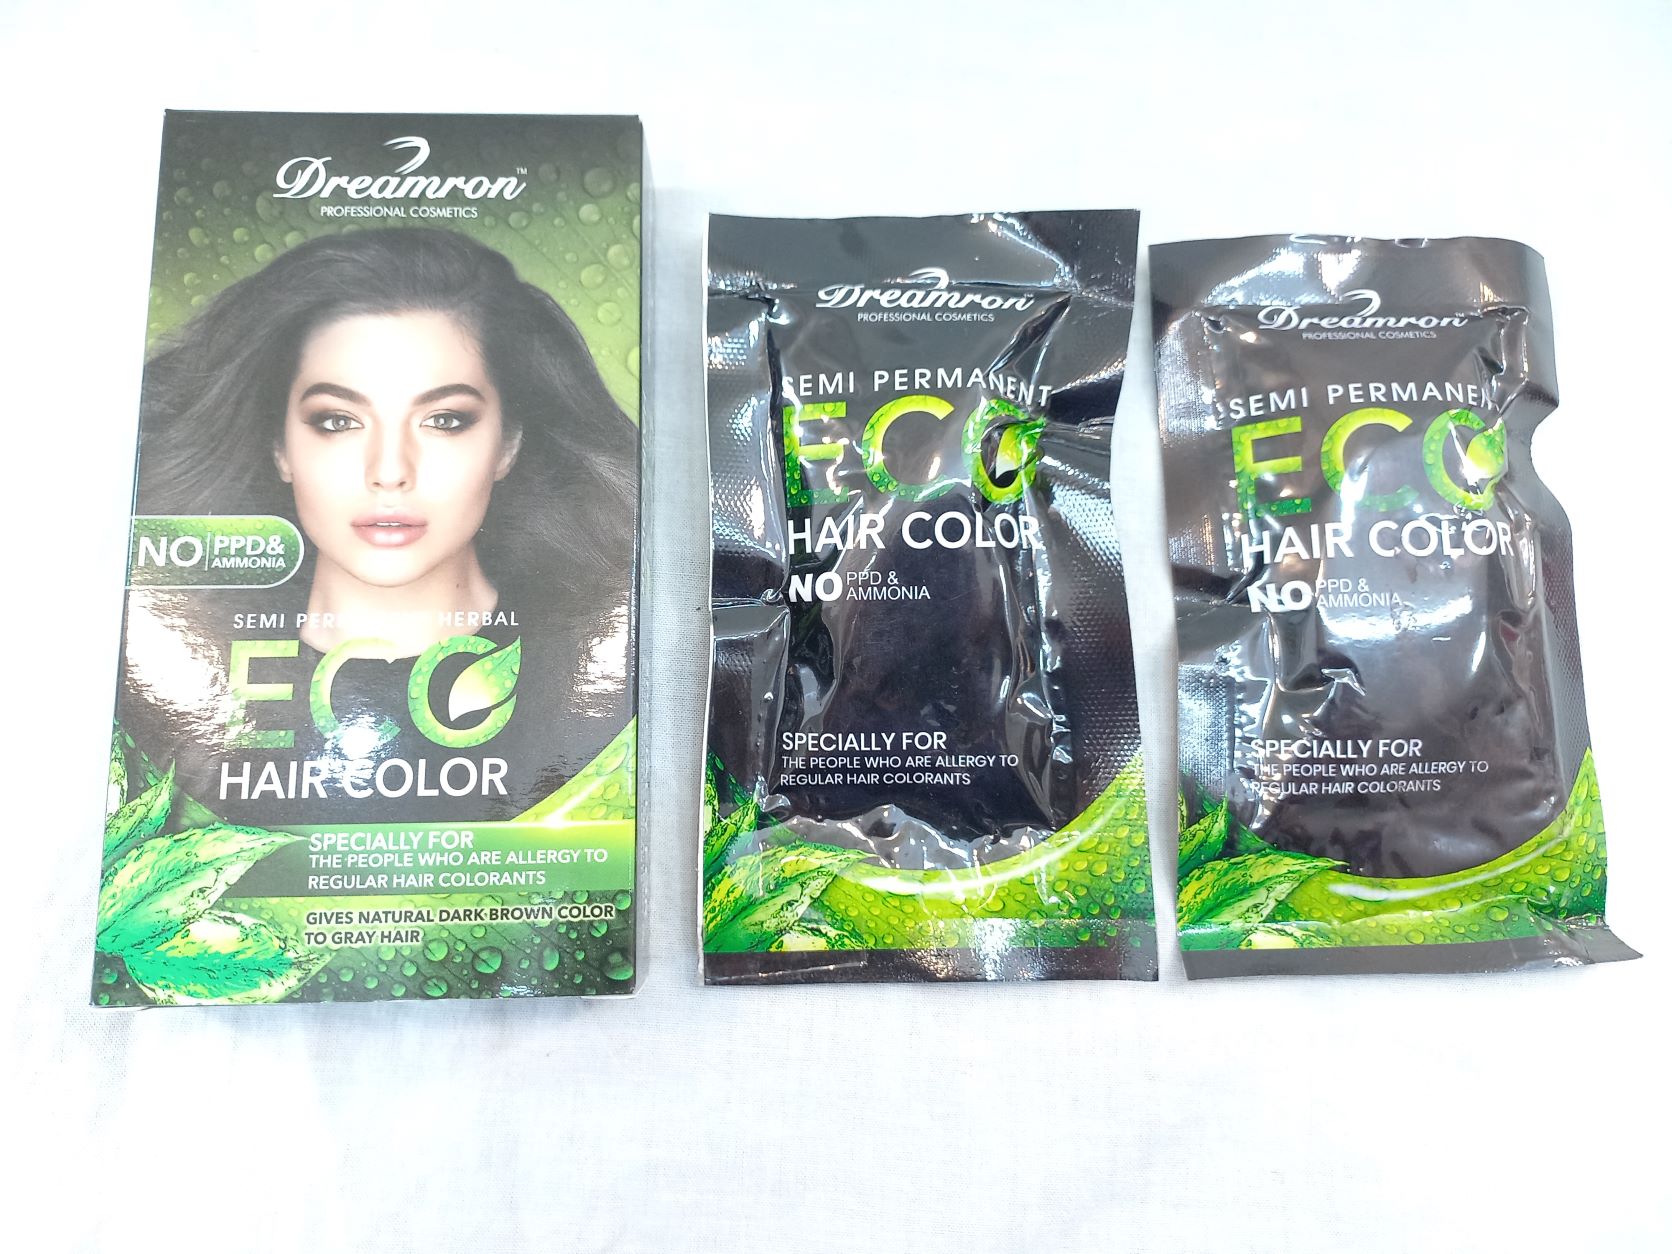 Dreamron No PPD No Ammonia Semi Permanent Herbal ECO Hair Color | ShopHere